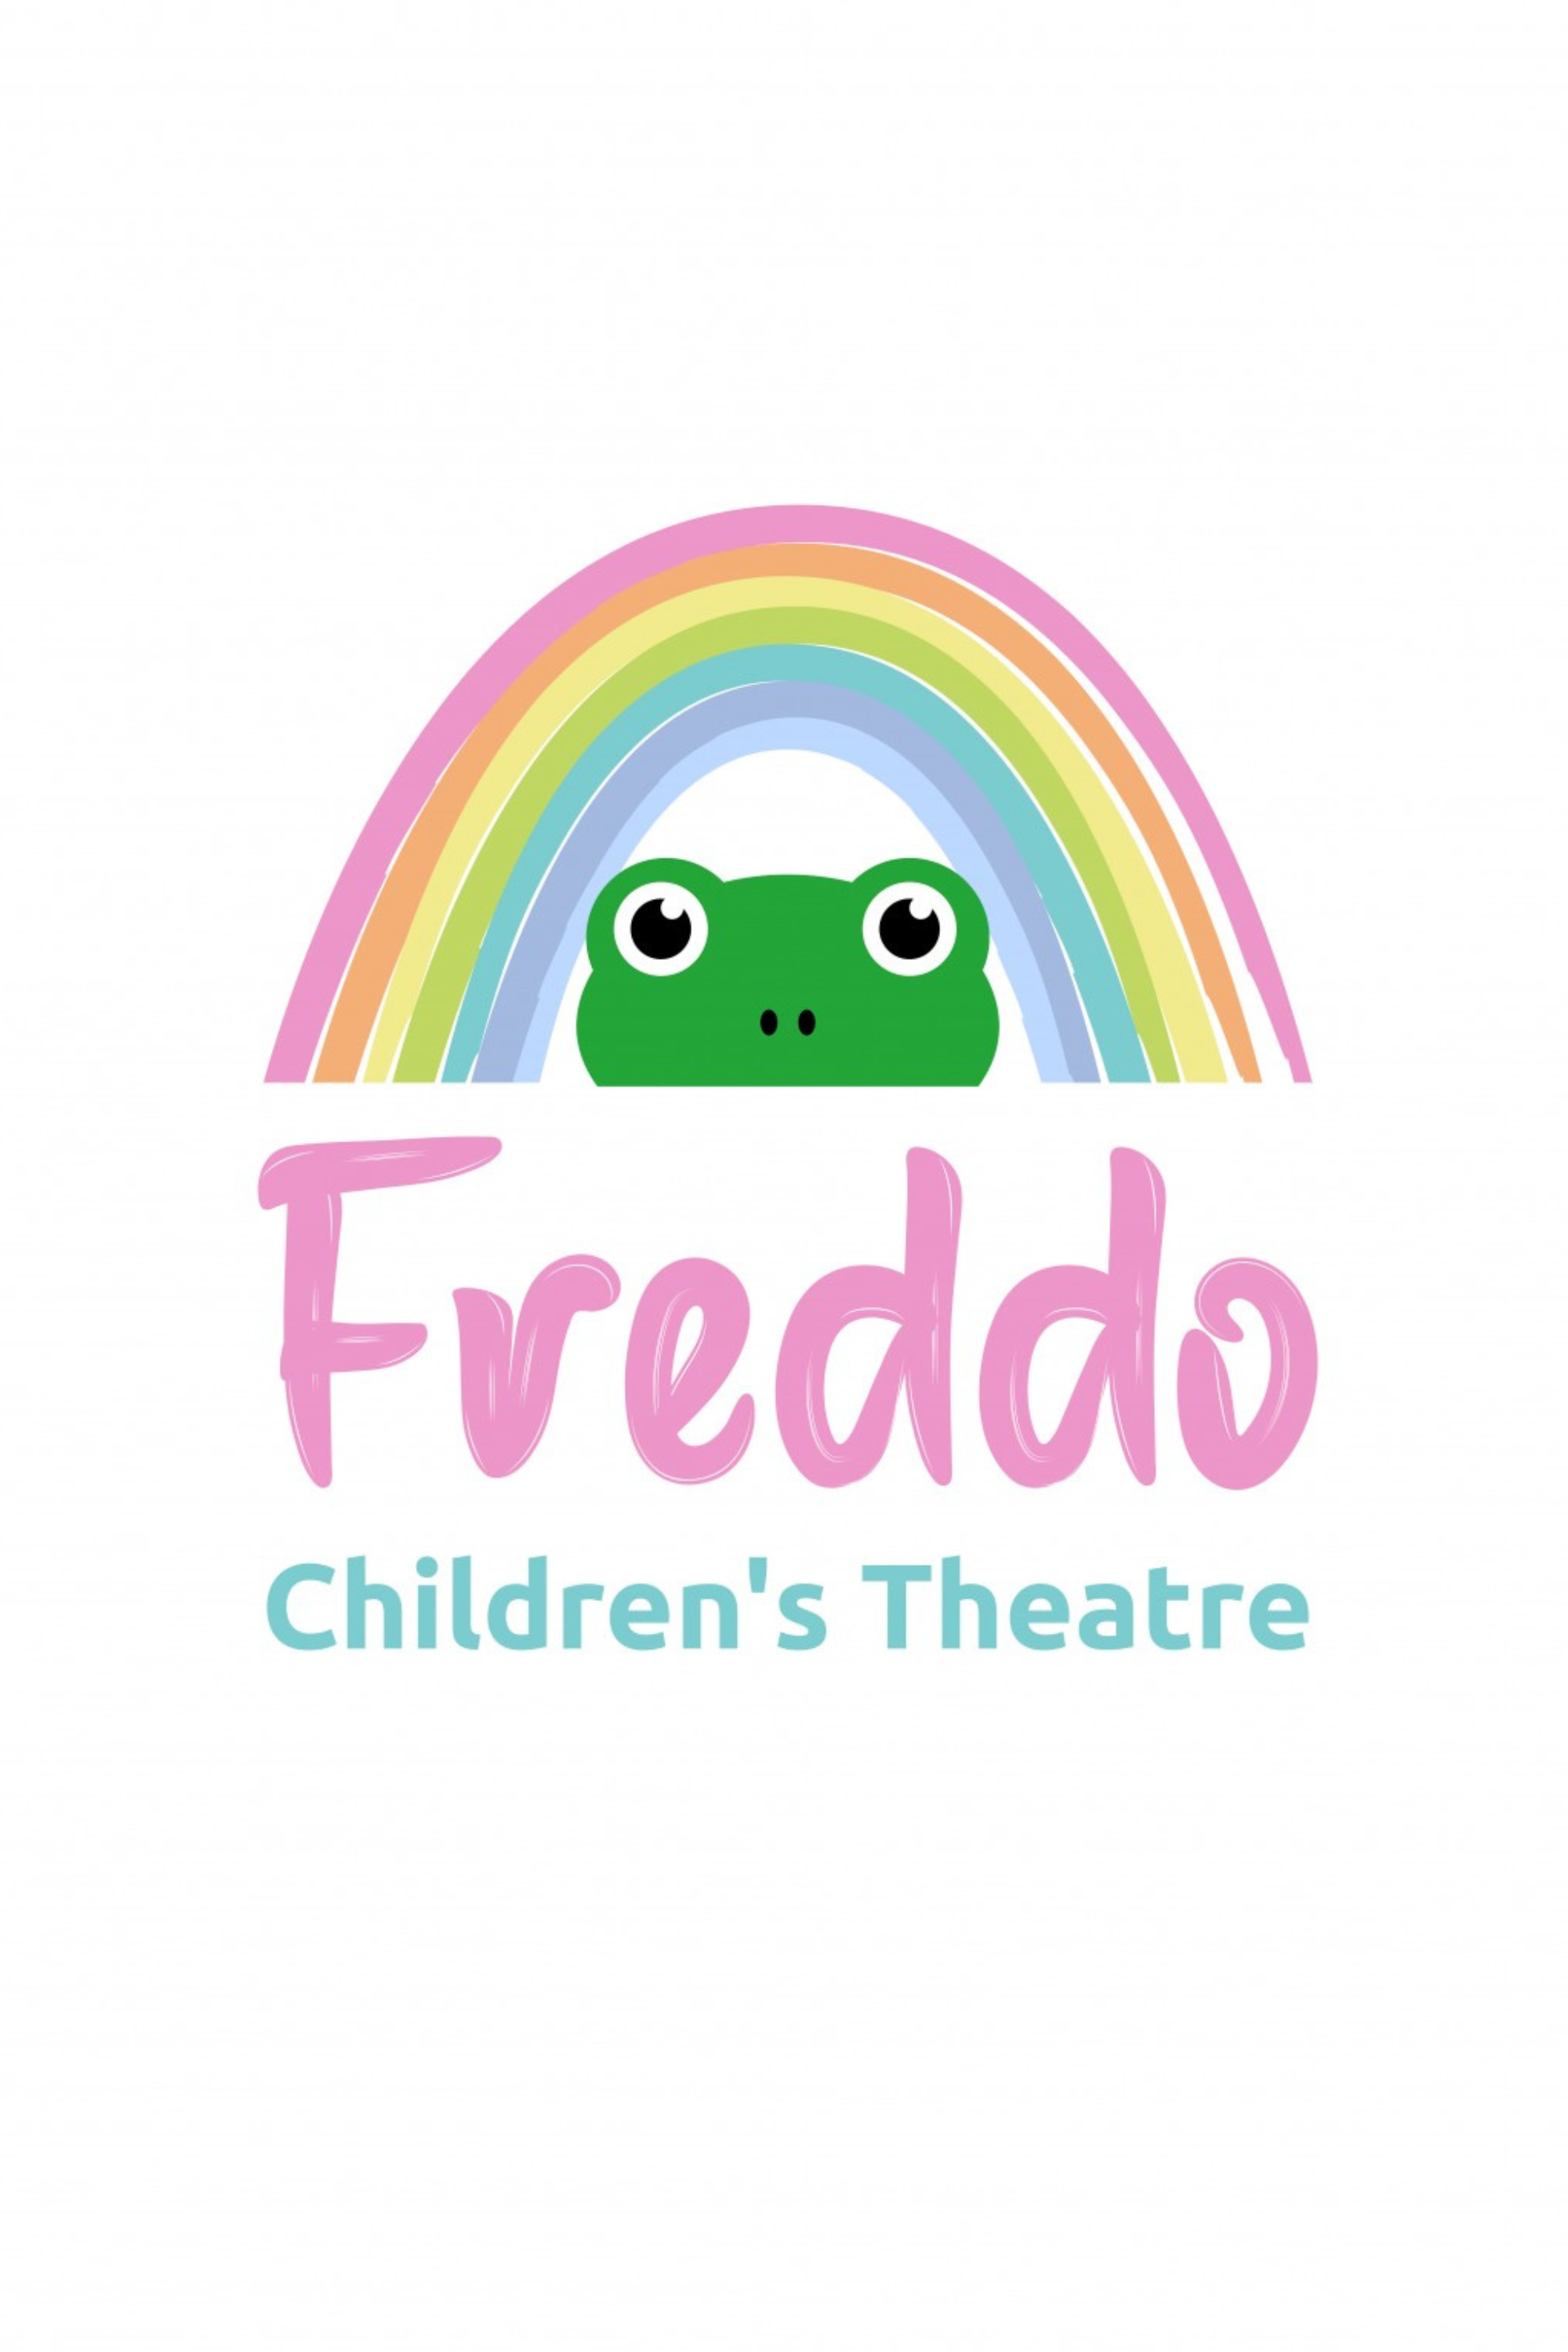 Freddo Children's Theatre